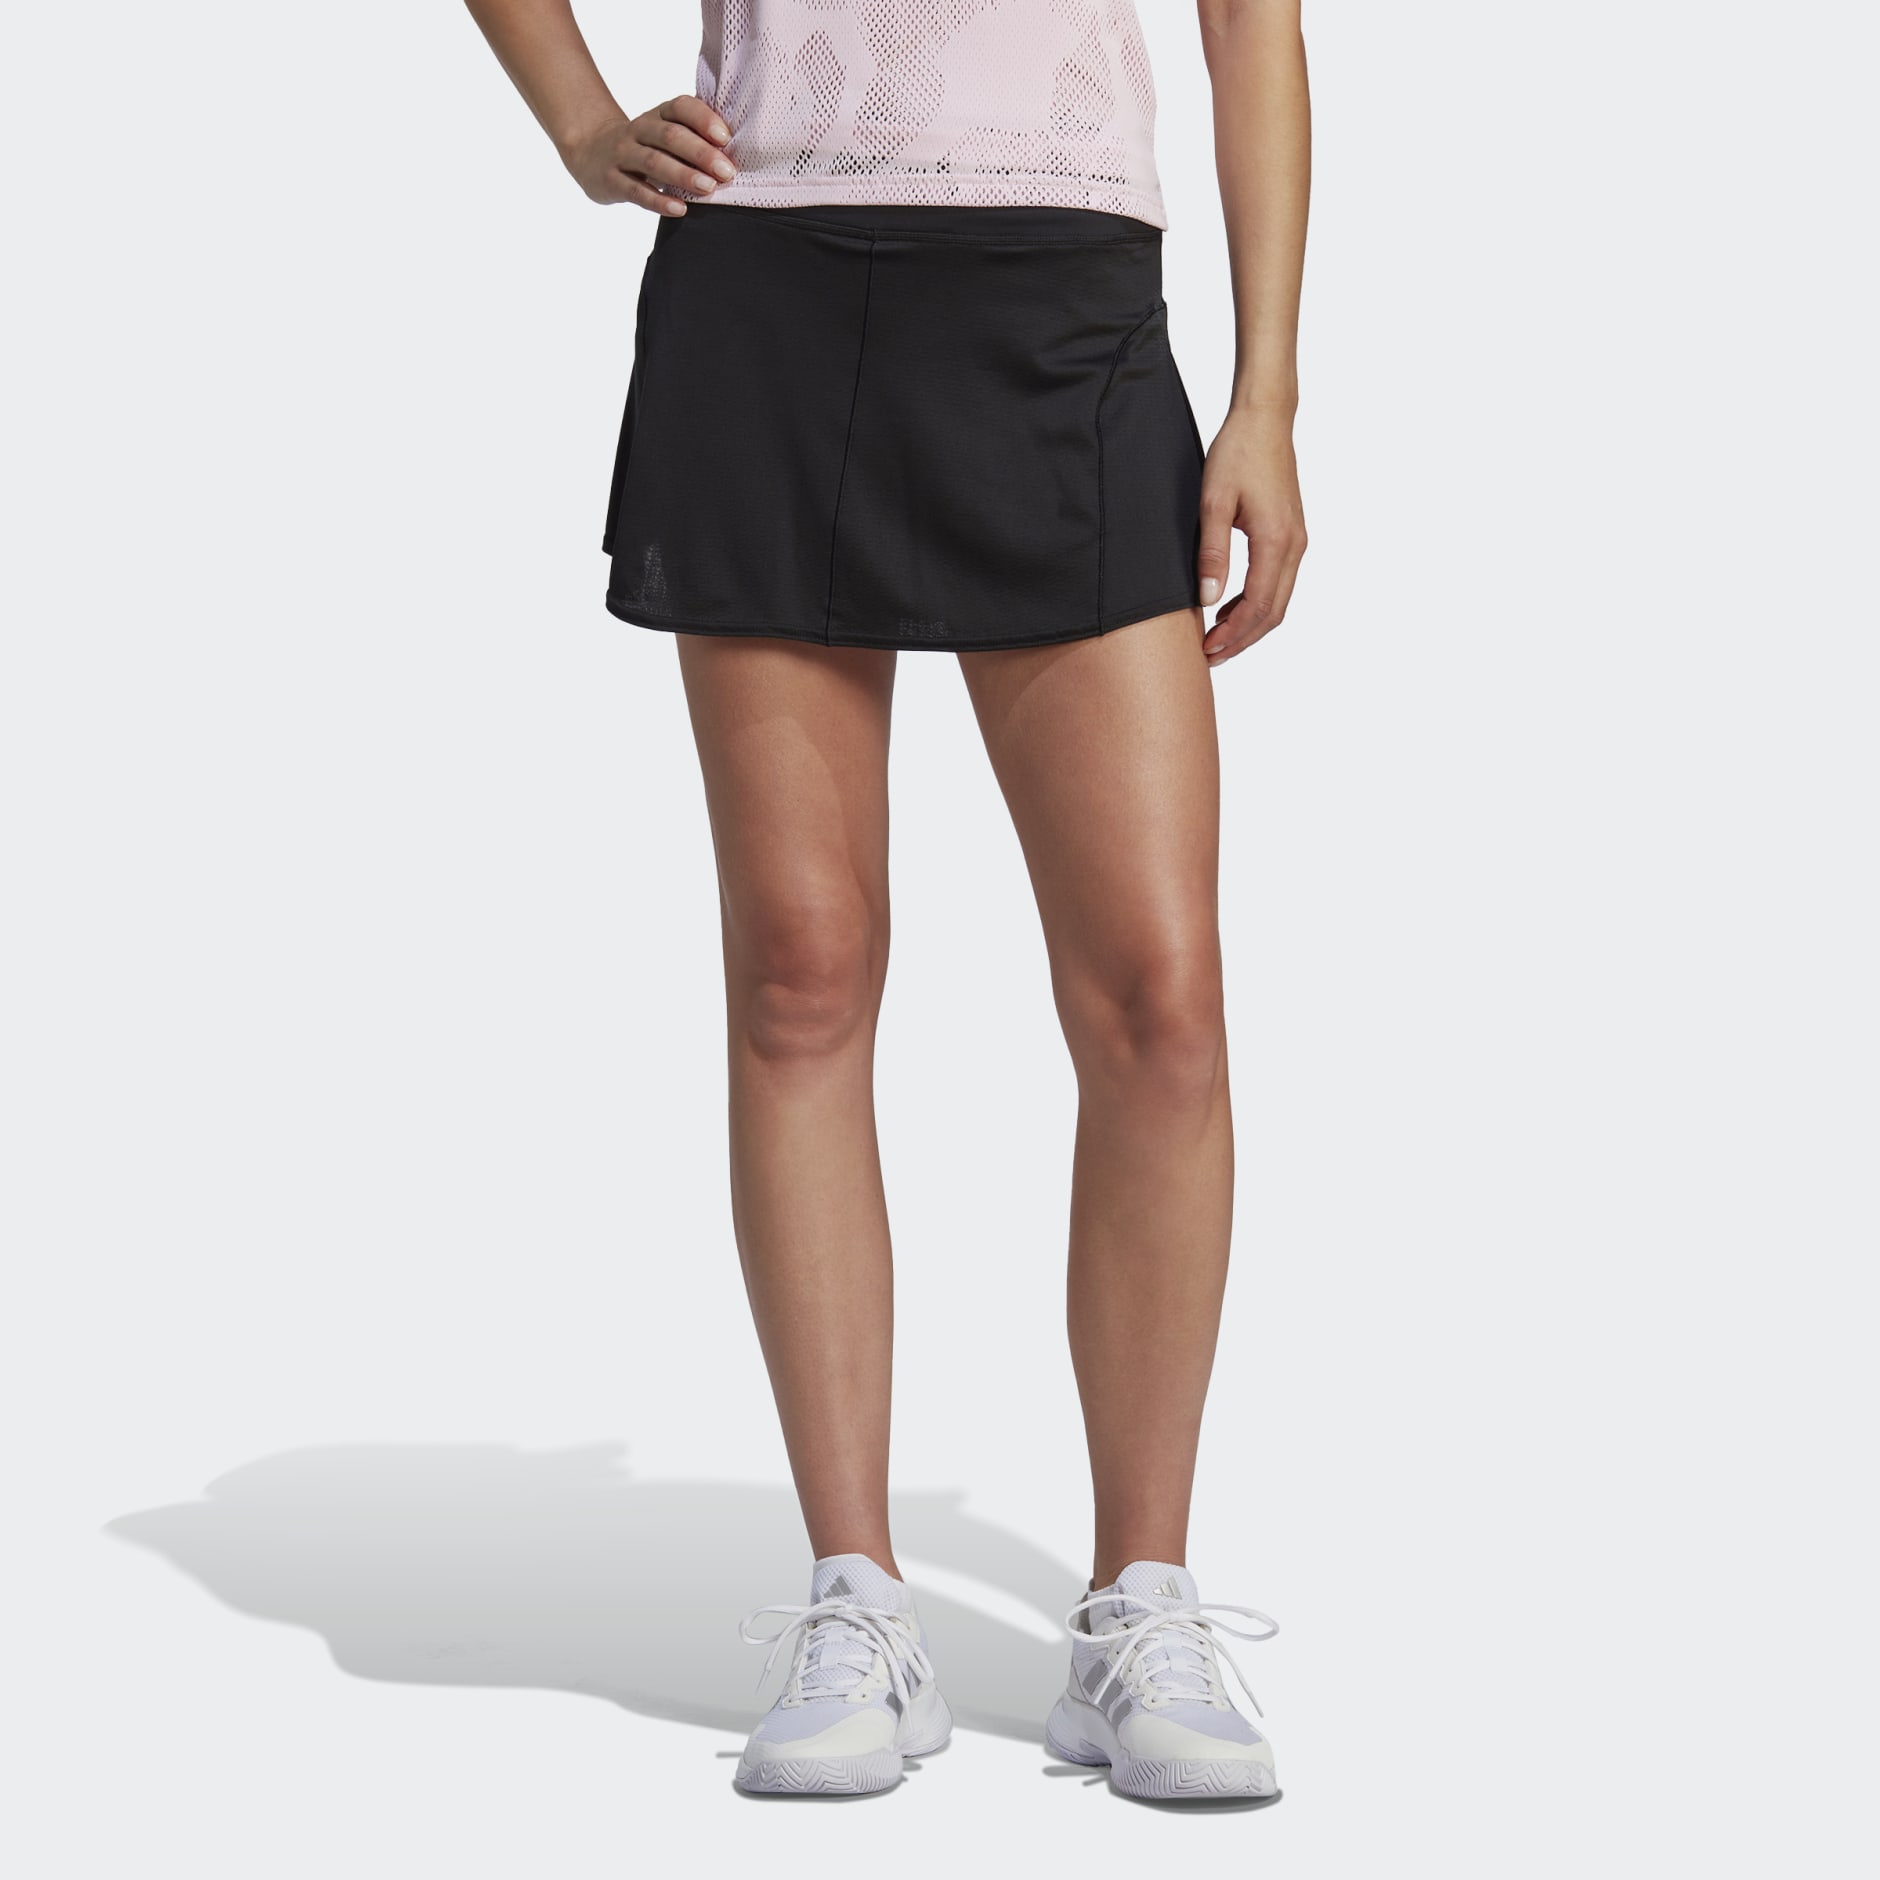 Women's Clothing - Tennis Match Skirt - Black